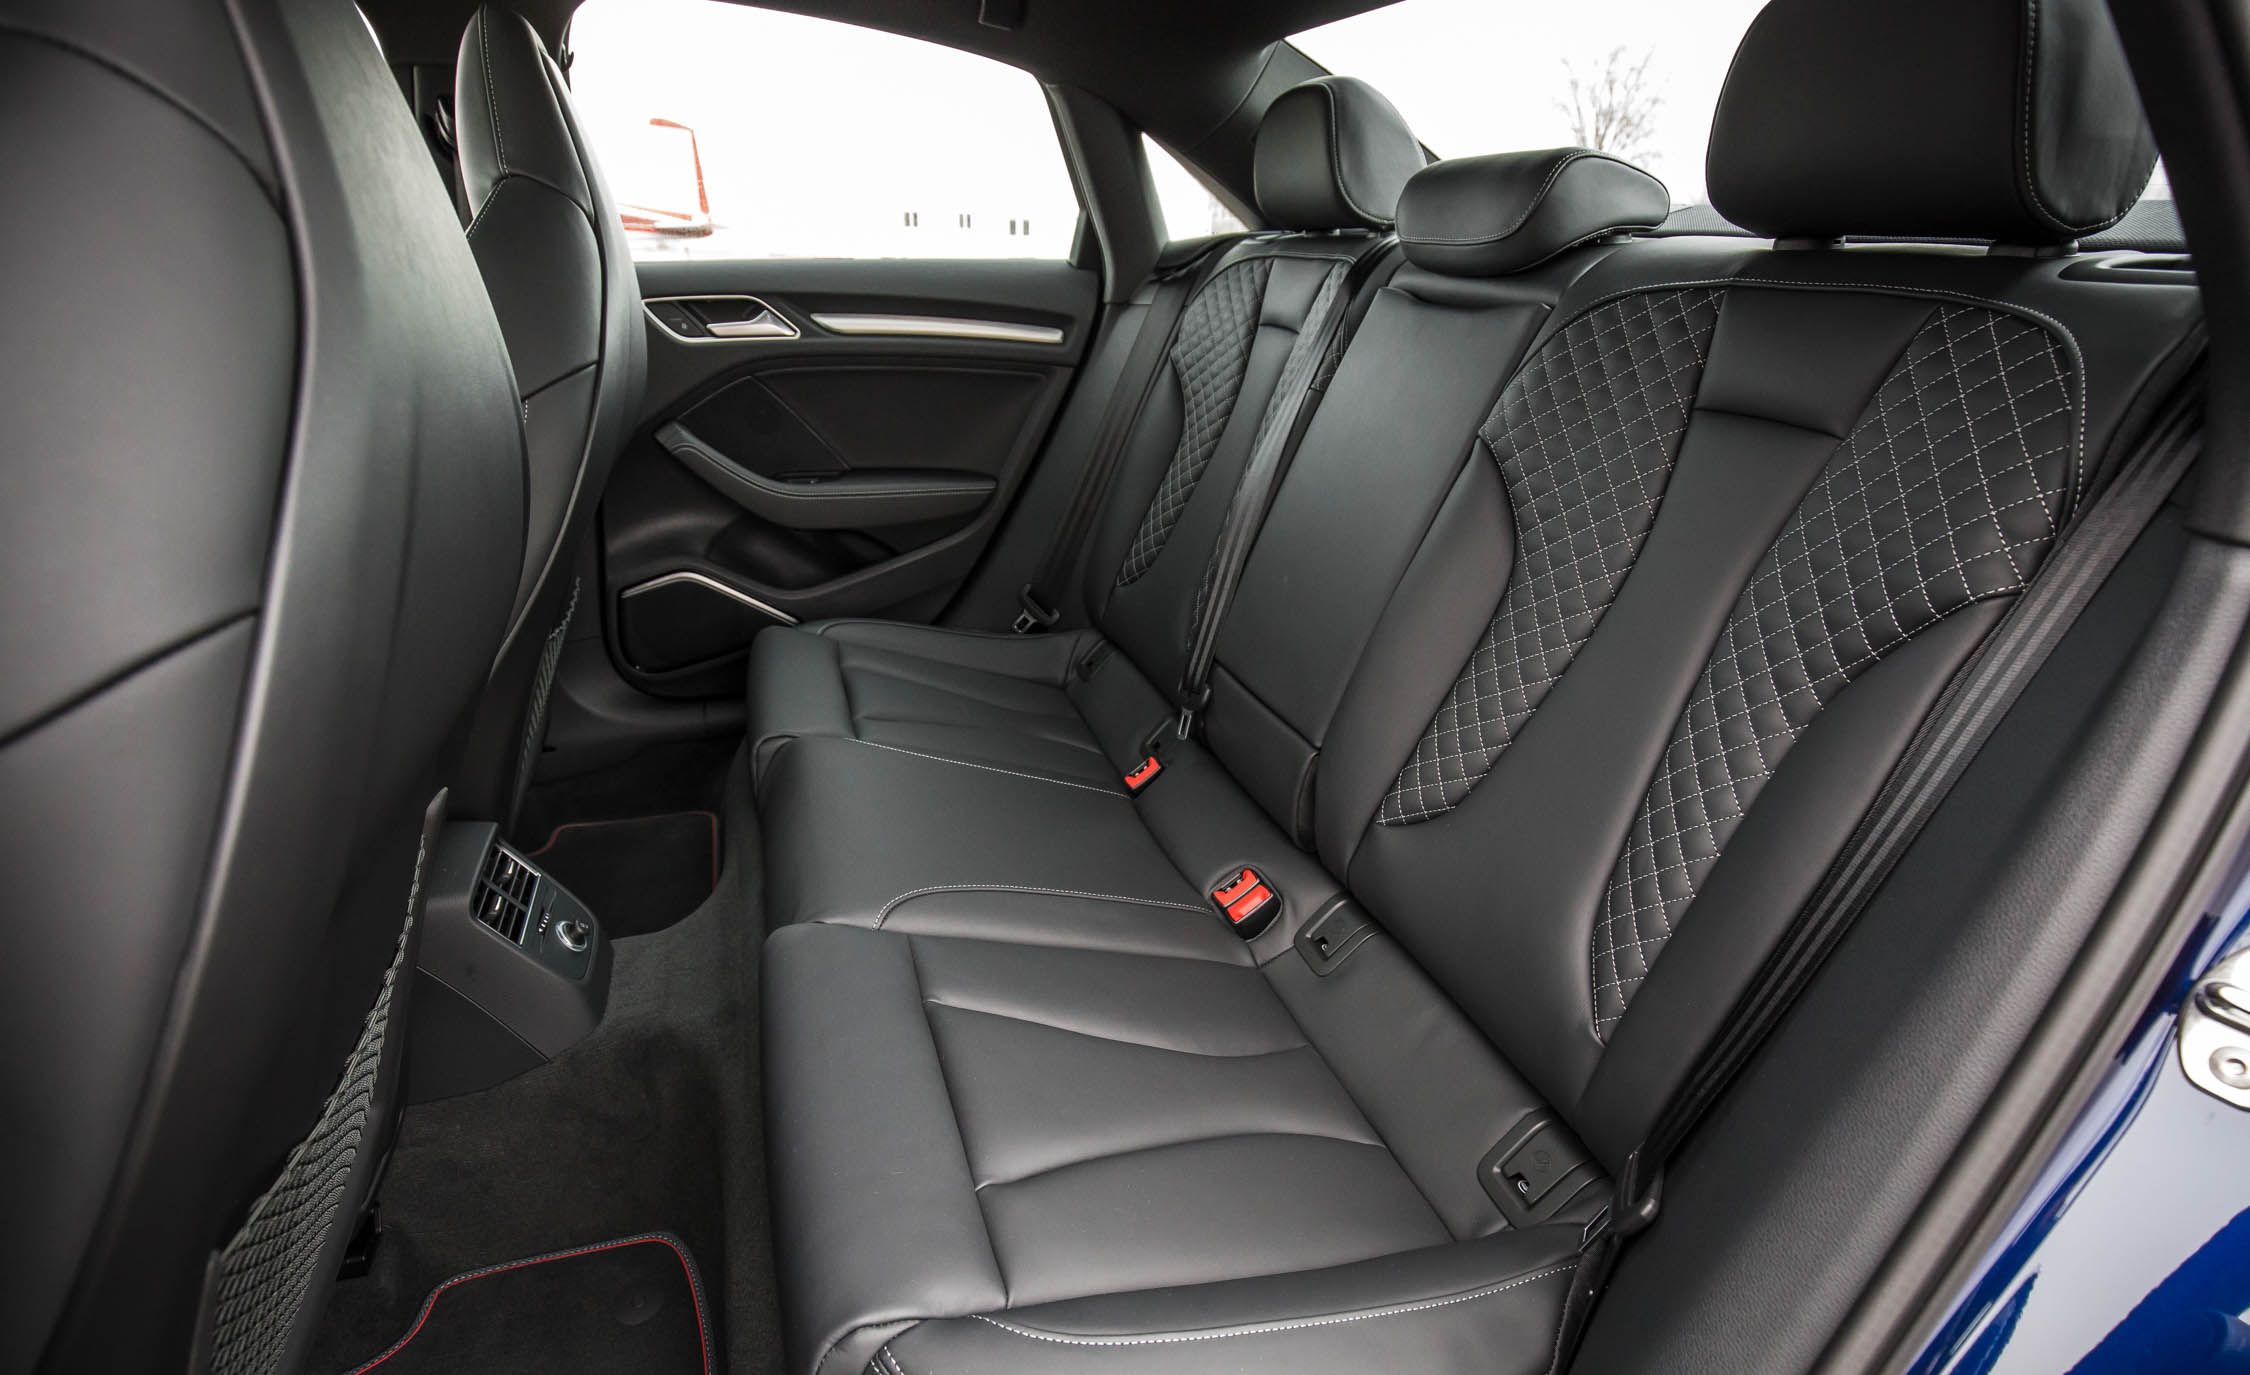 2017 Audi S3 Interior Seats Rear Passengers (View 27 of 50)